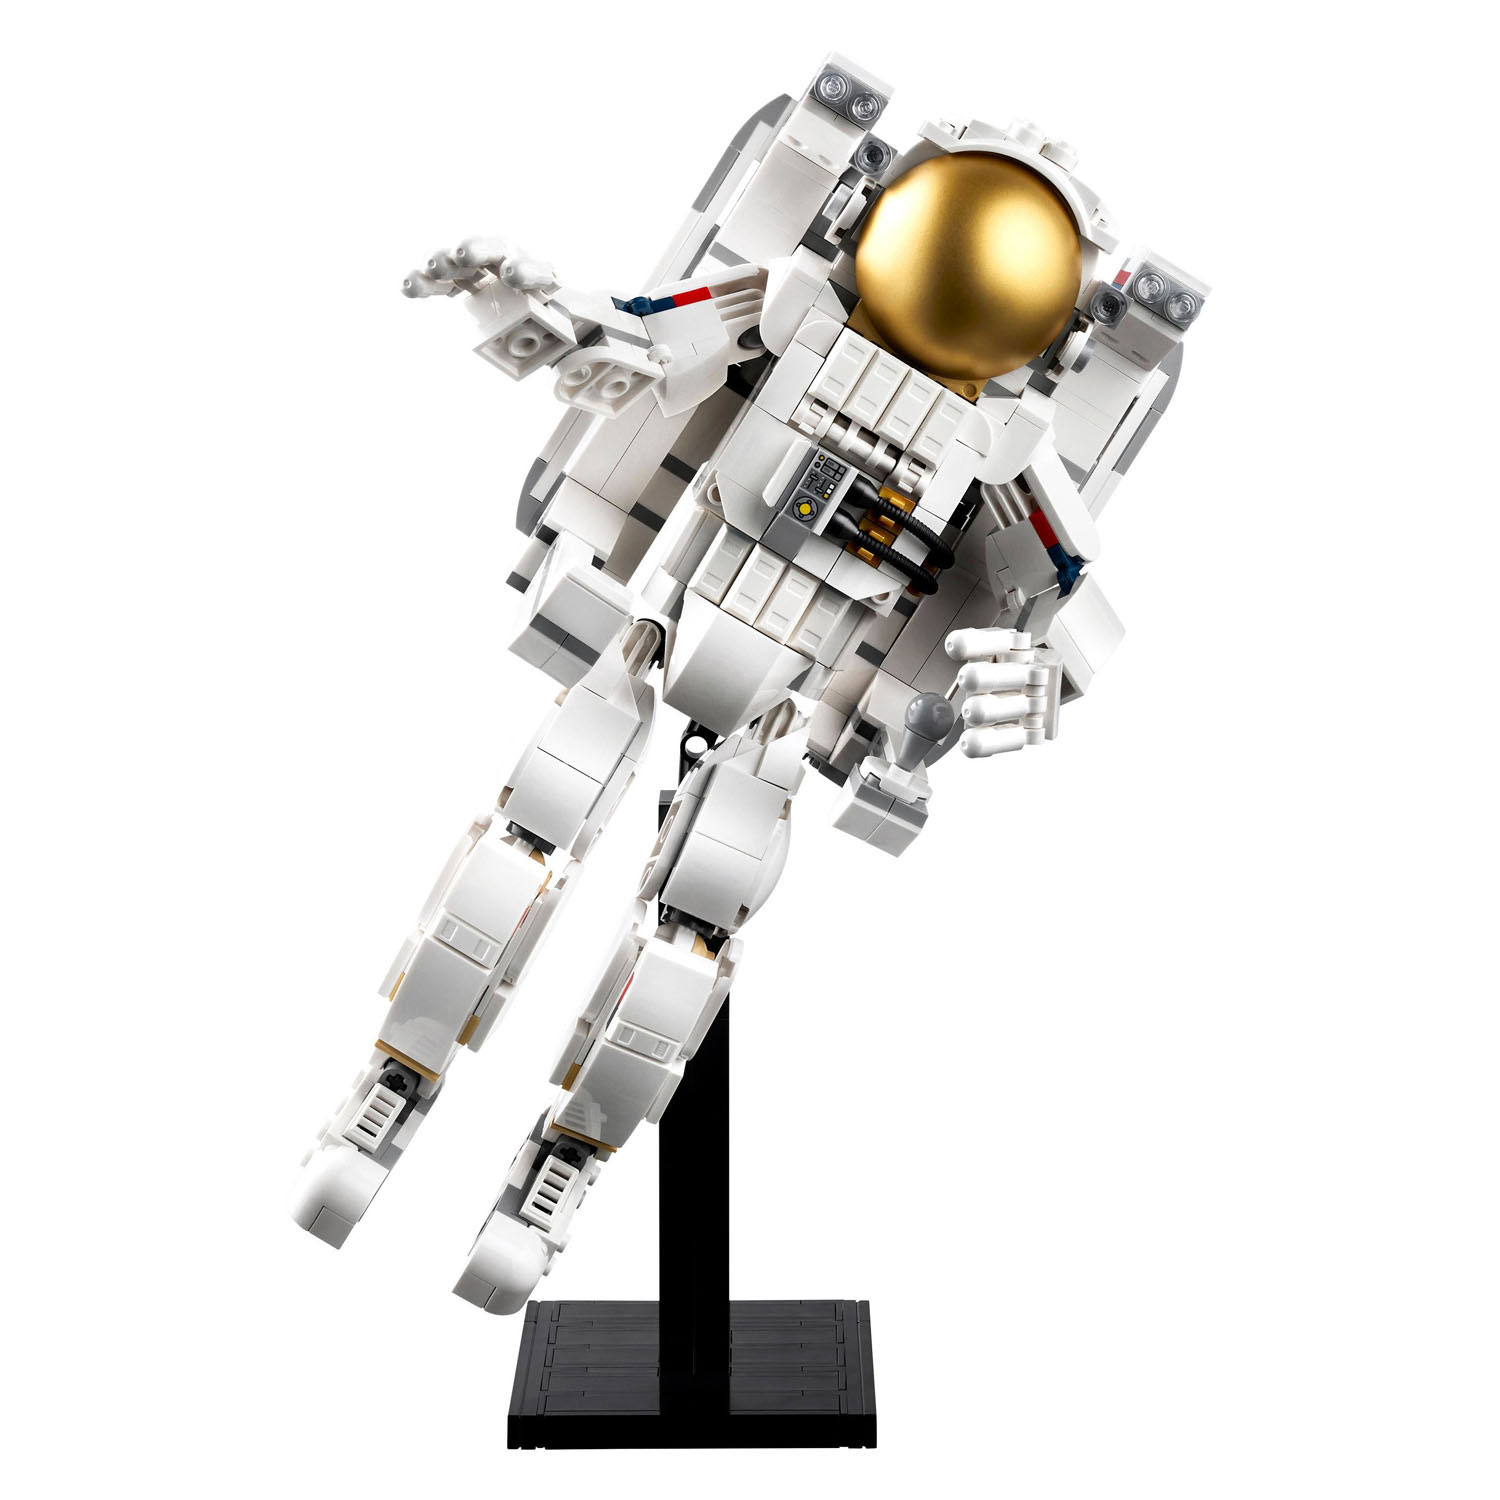 LEGO Creator 31152 L'homme de l'espace